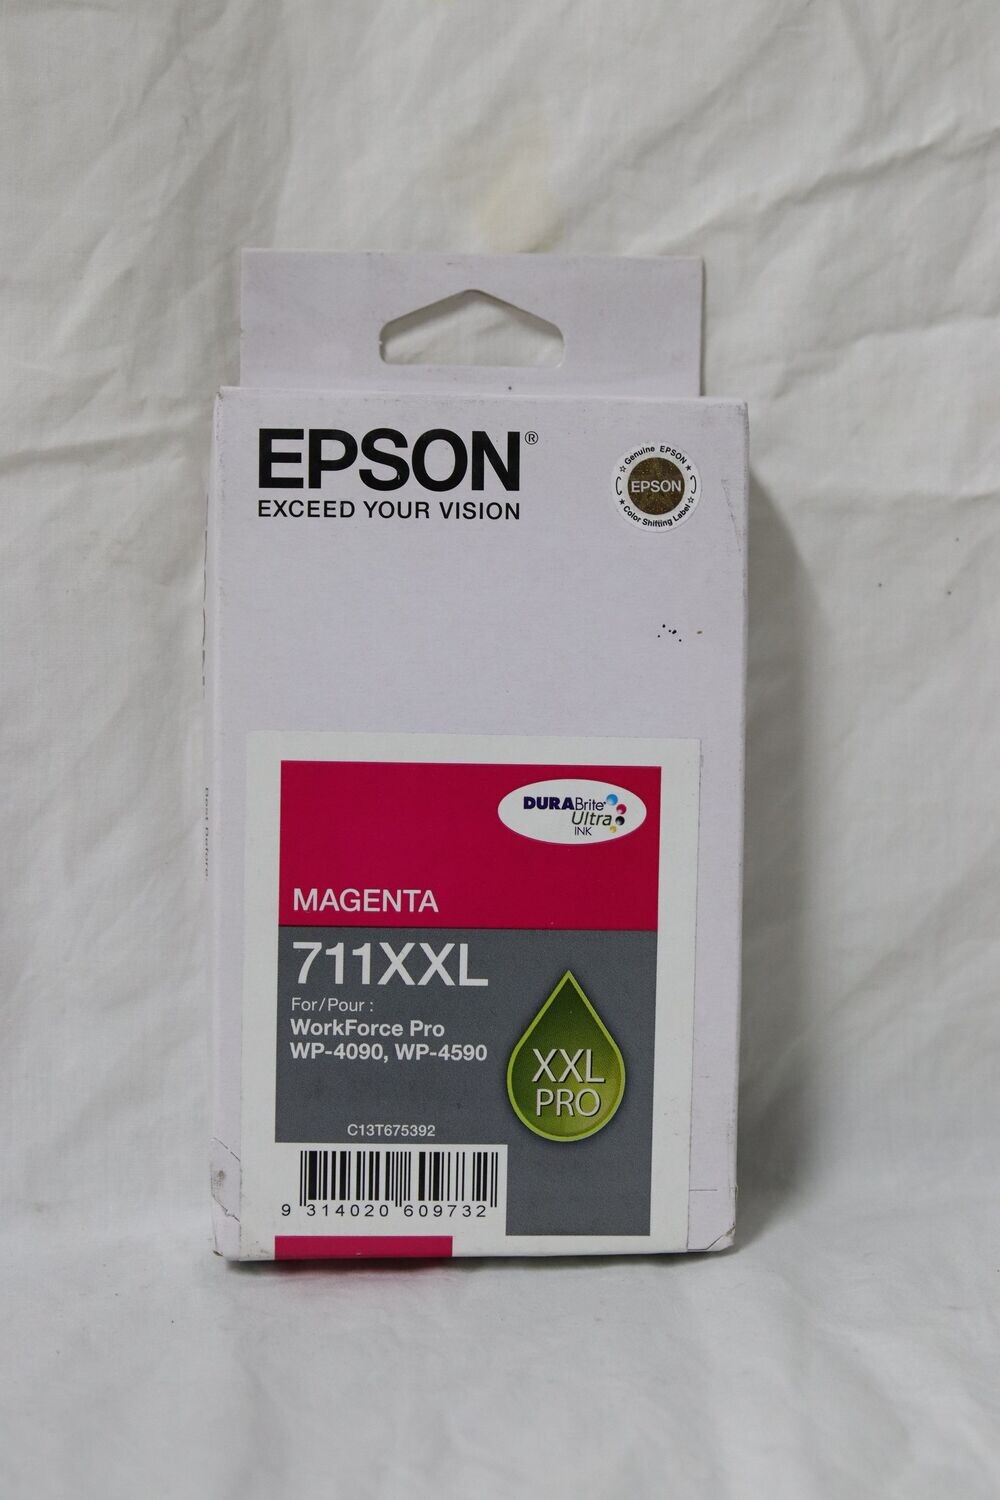 Epson 711XXL Magenta Ink Cartridge